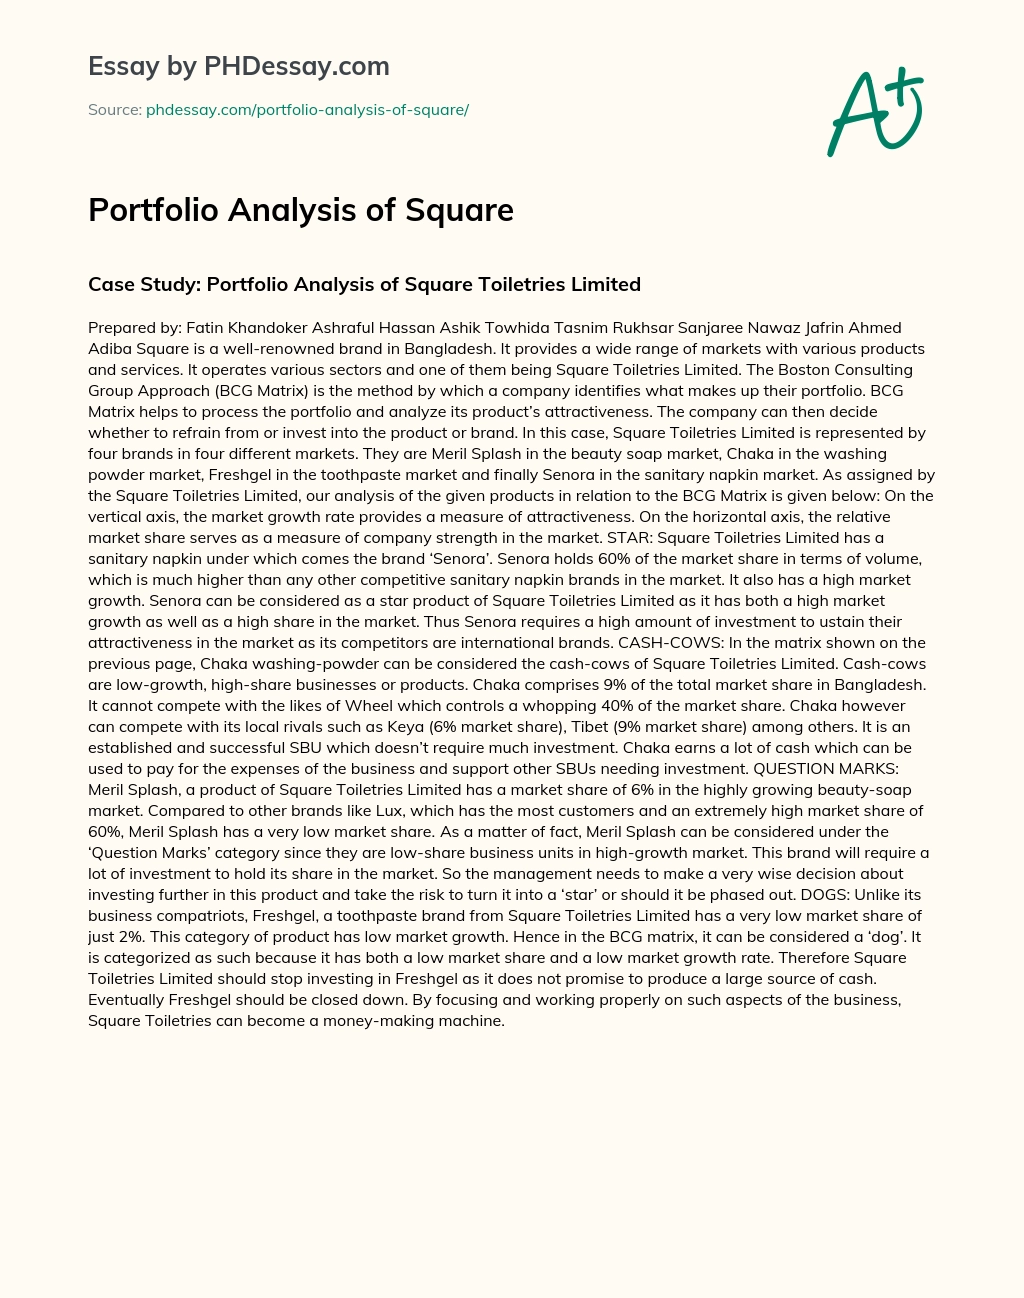 Portfolio Analysis of Square essay